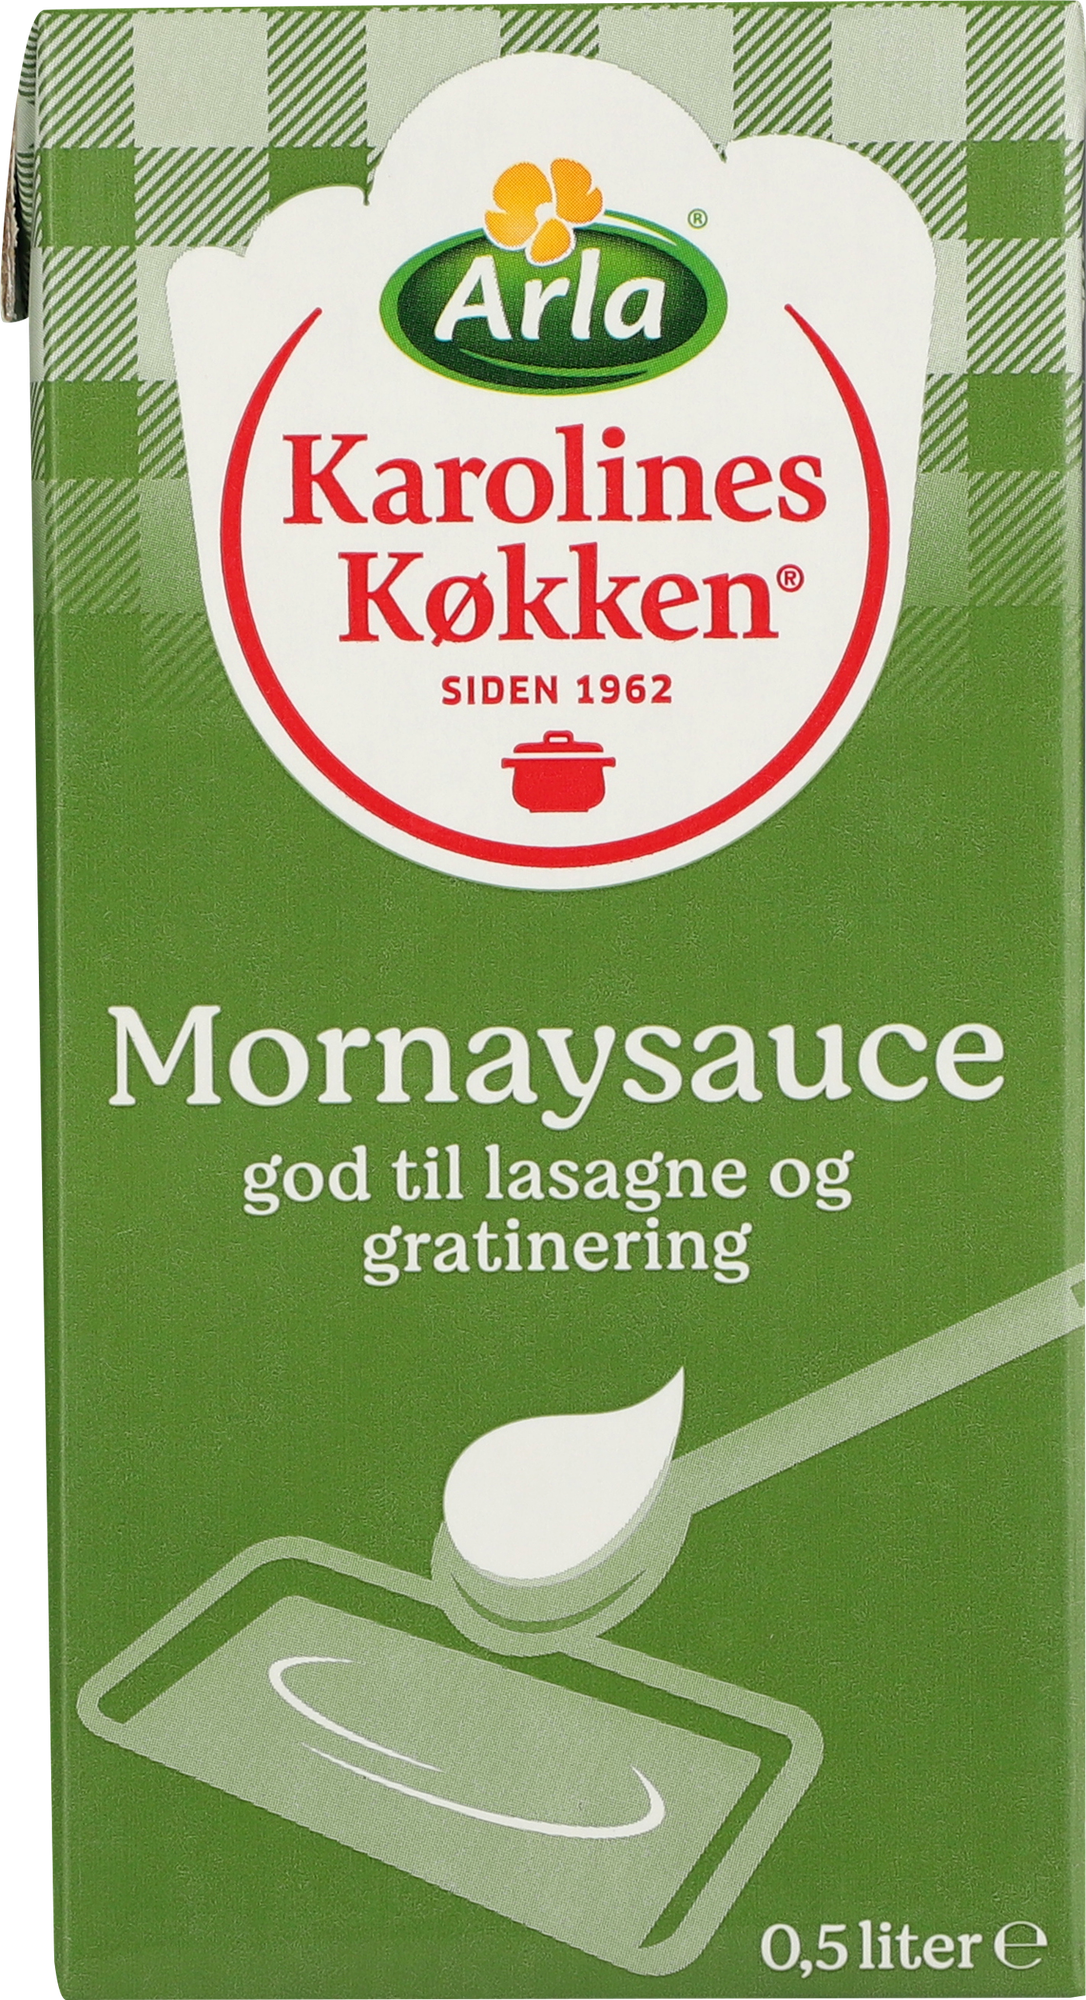 Arla Karolines Køkken® monaysauce 500 ml